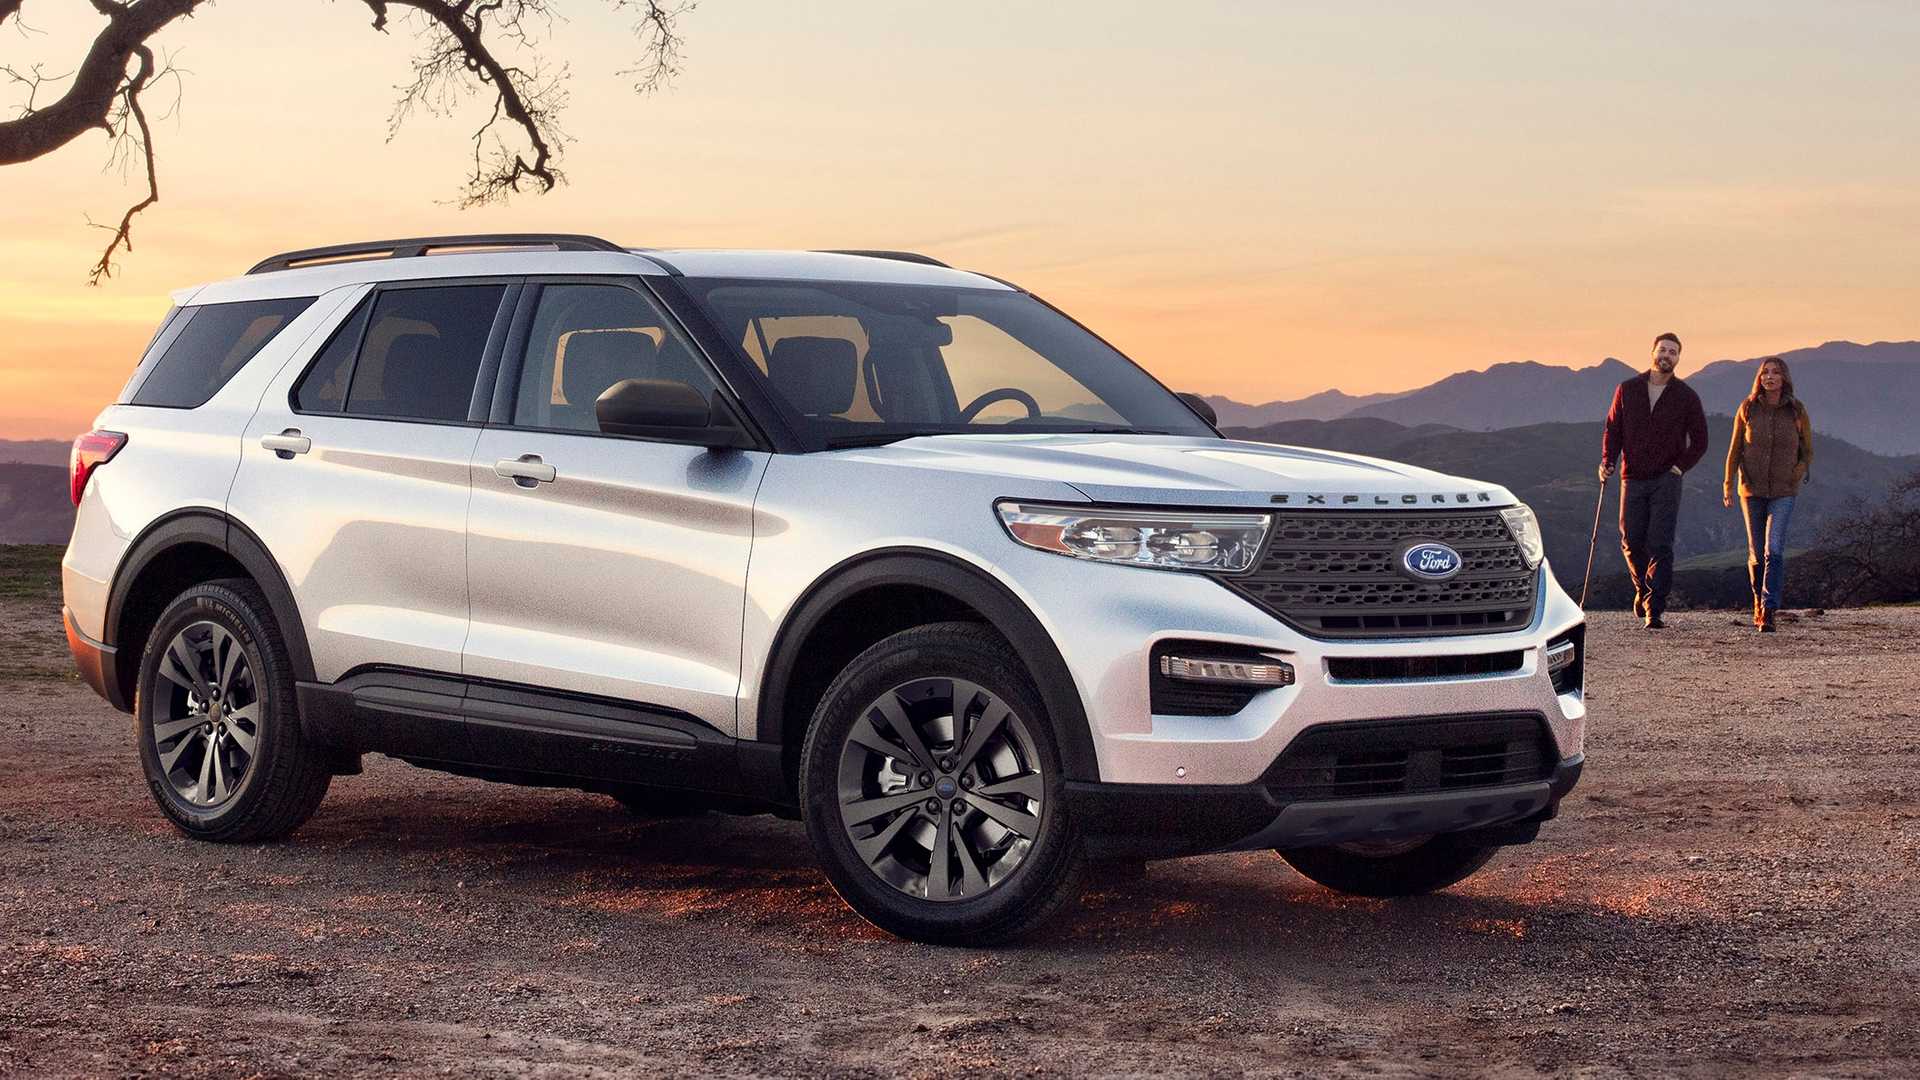 2019 Ford Explorer SUV Latest Prices Reviews Specs Photos and  Incentives  Autoblog